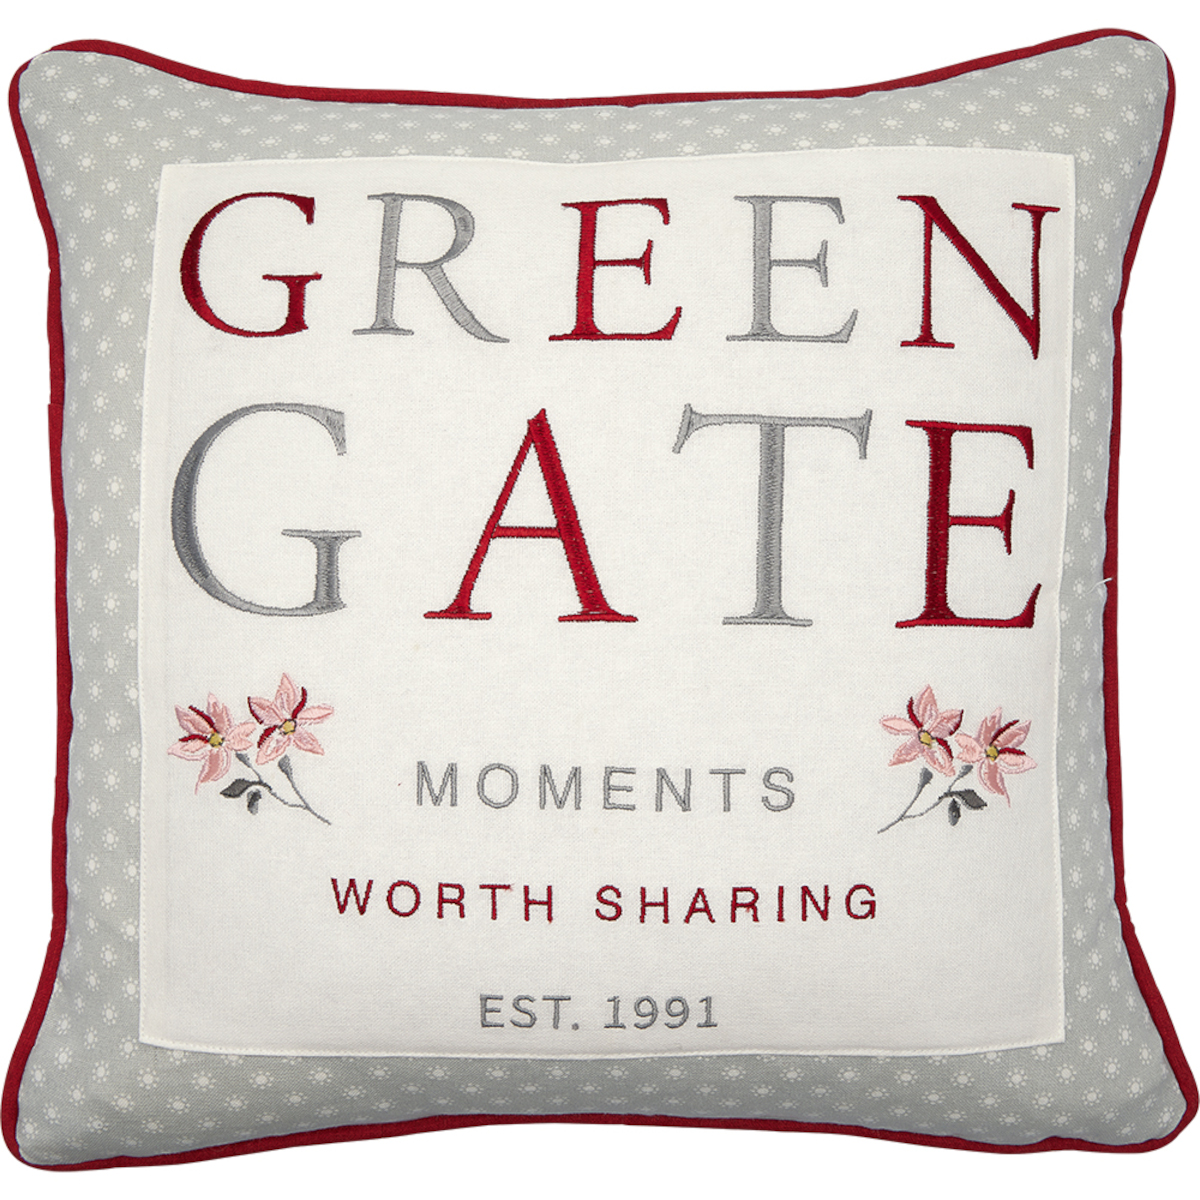 Greengate Moments Kissenbezug mit Stickerei rot 40x40cm